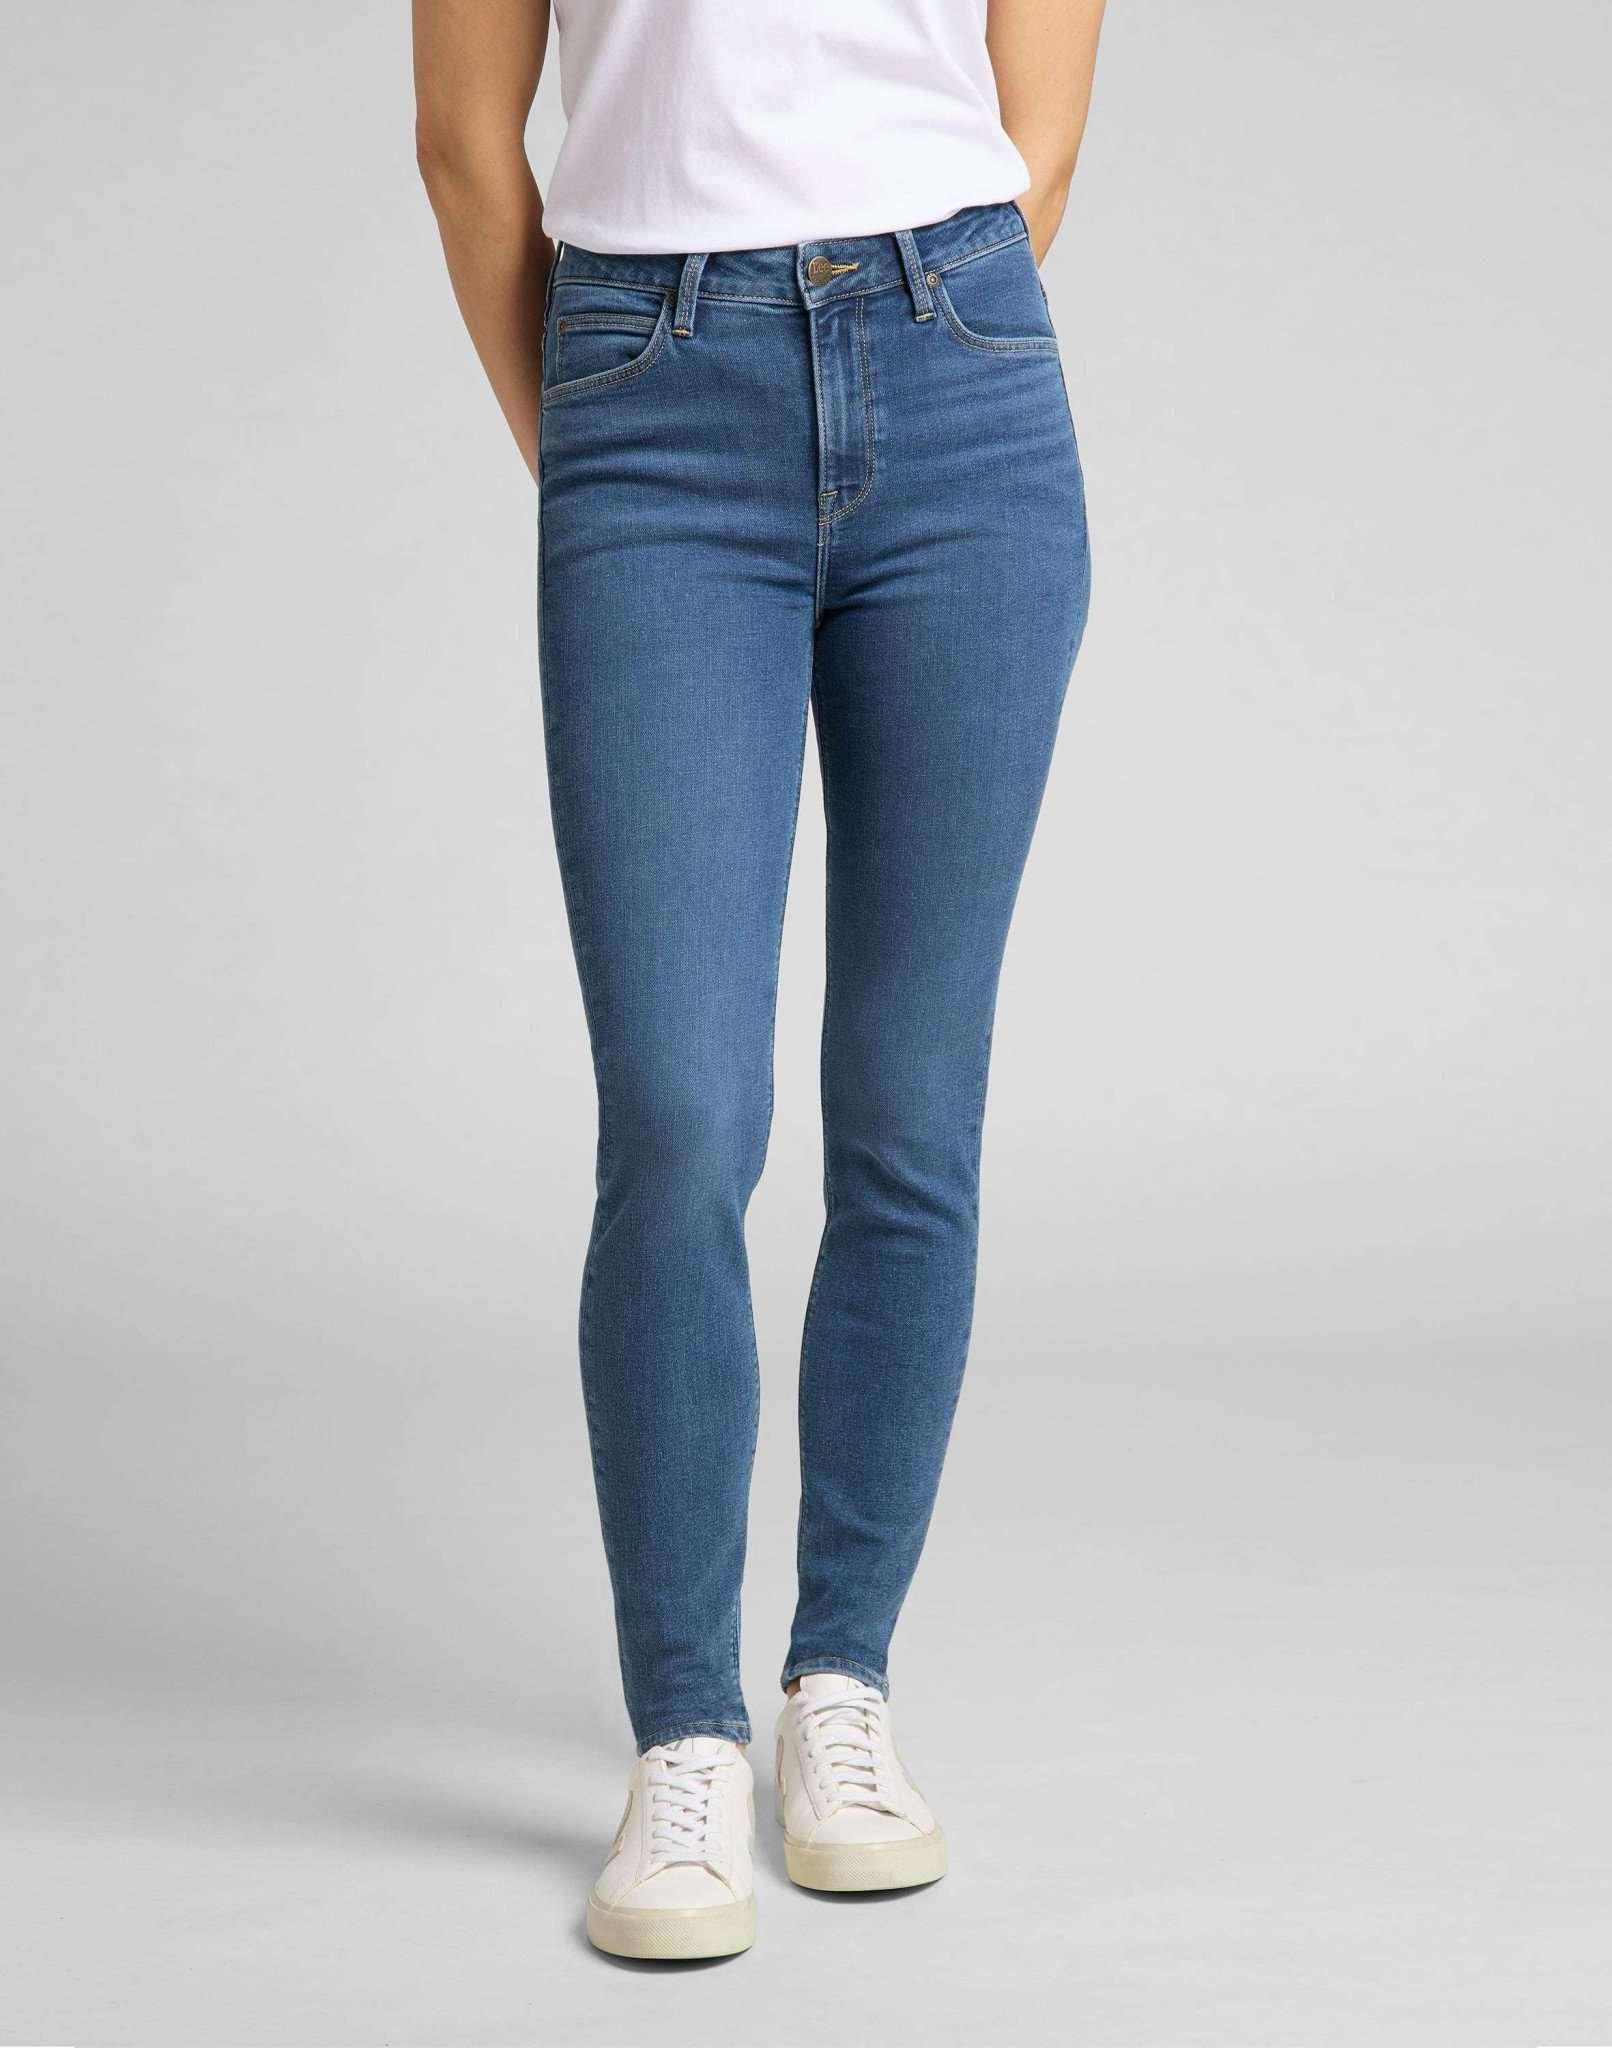 Jeans Skinny Fit Scarlett High Damen Blau Denim L33/W28 von Lee